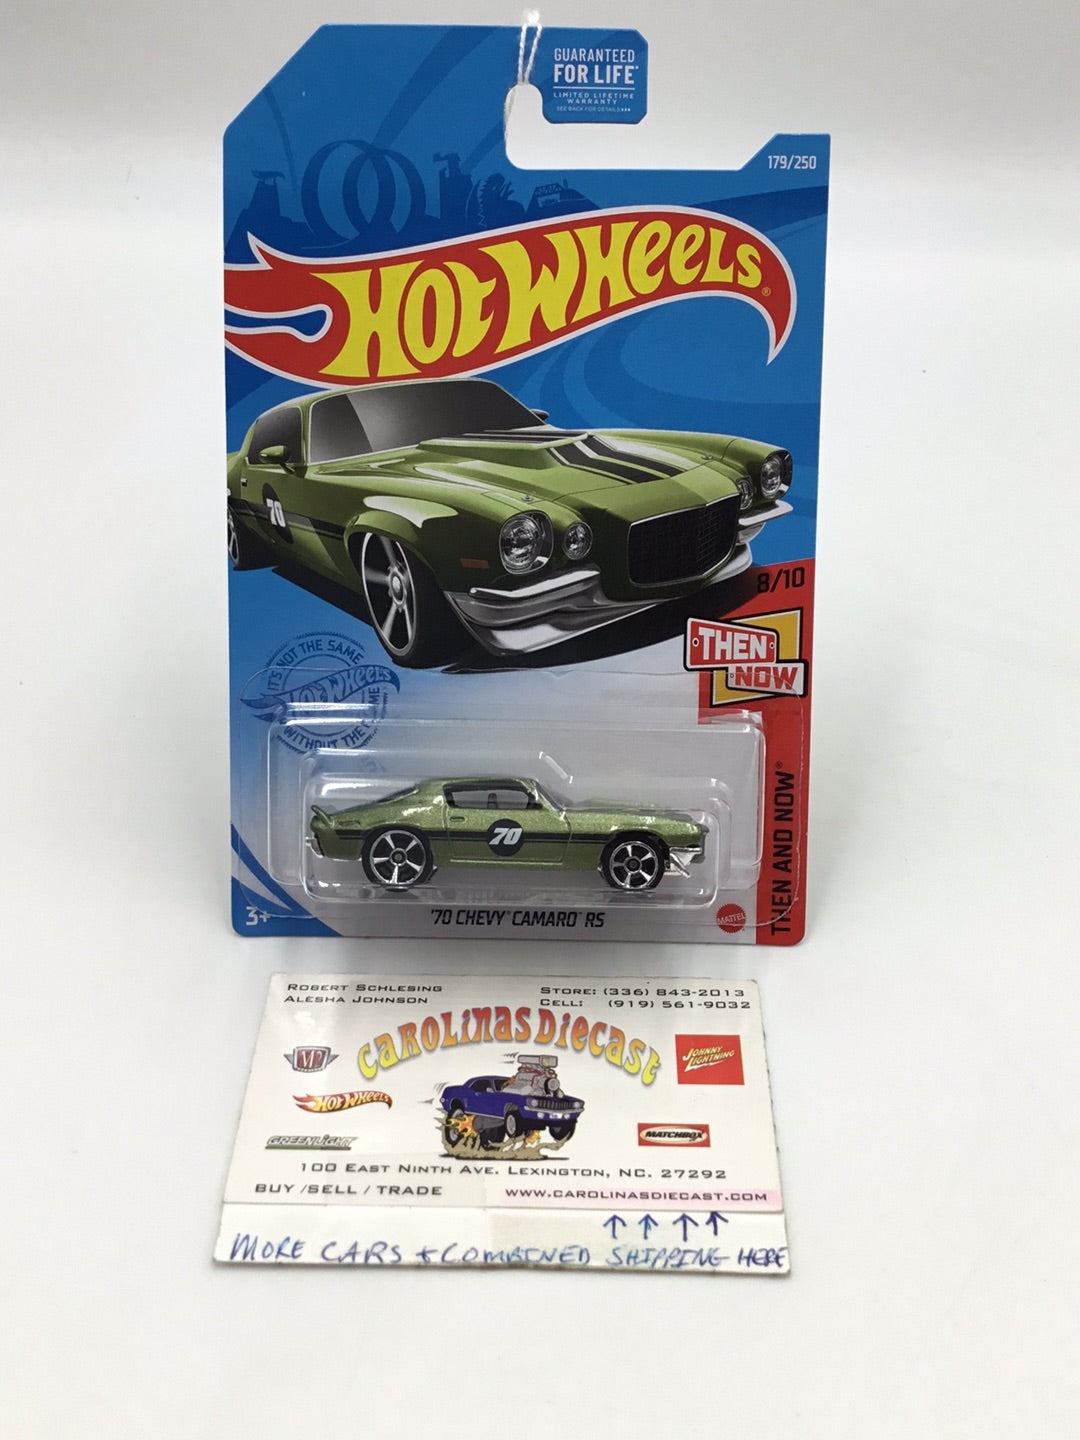 2021 Hot wheels #179 Walgreens Exclusive 70 Chevy Camaro RS GG2